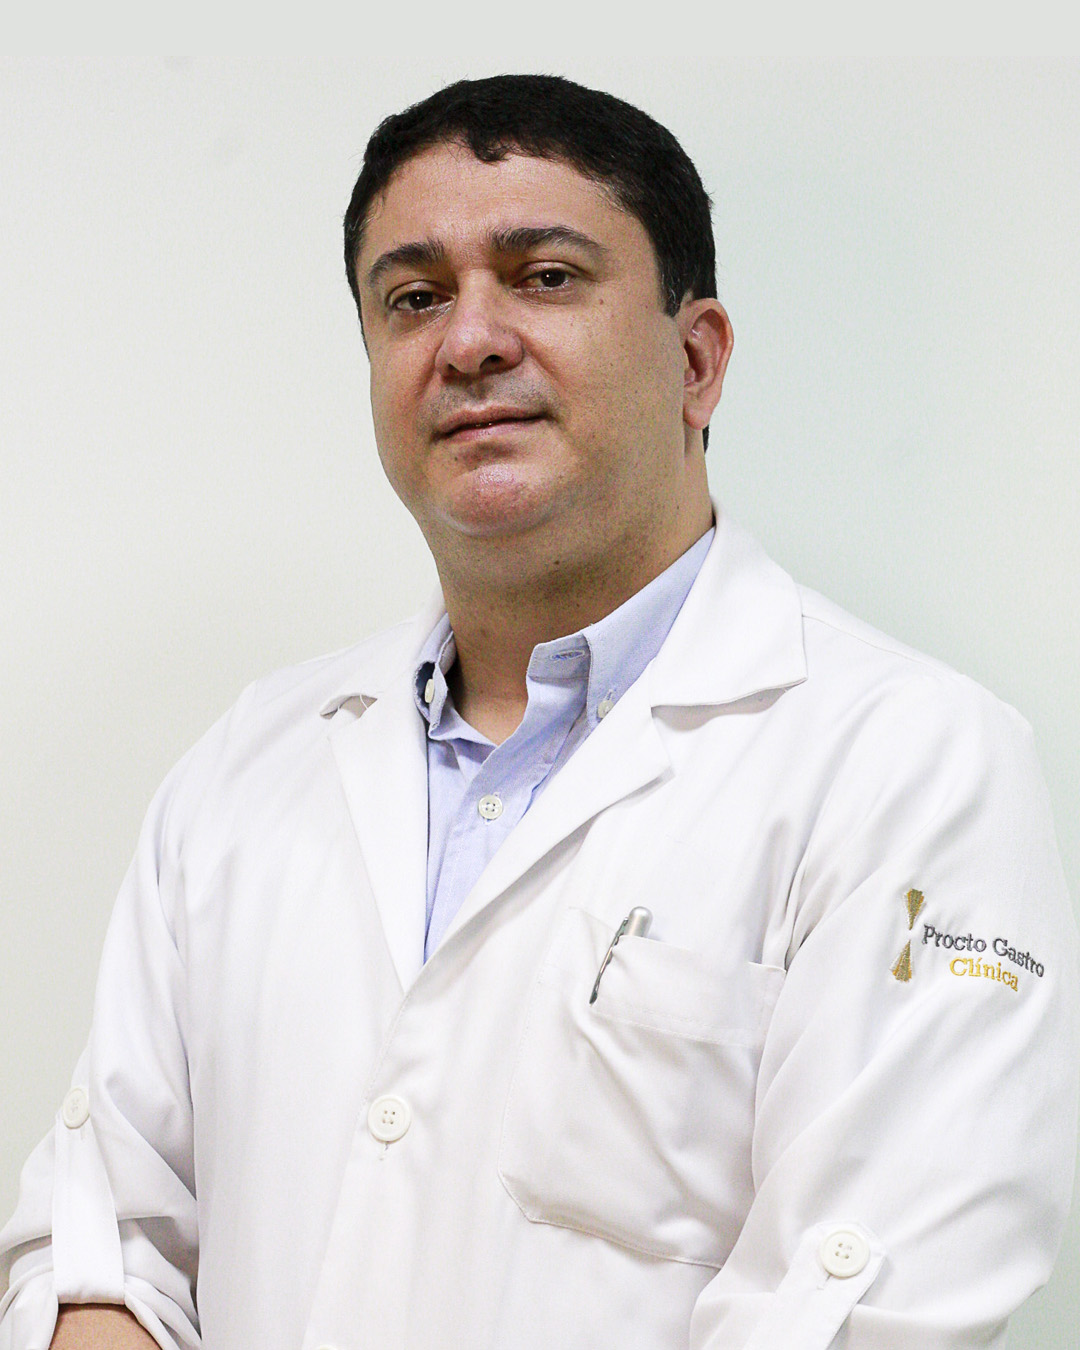 Dr. Sandro da C. Ferreira